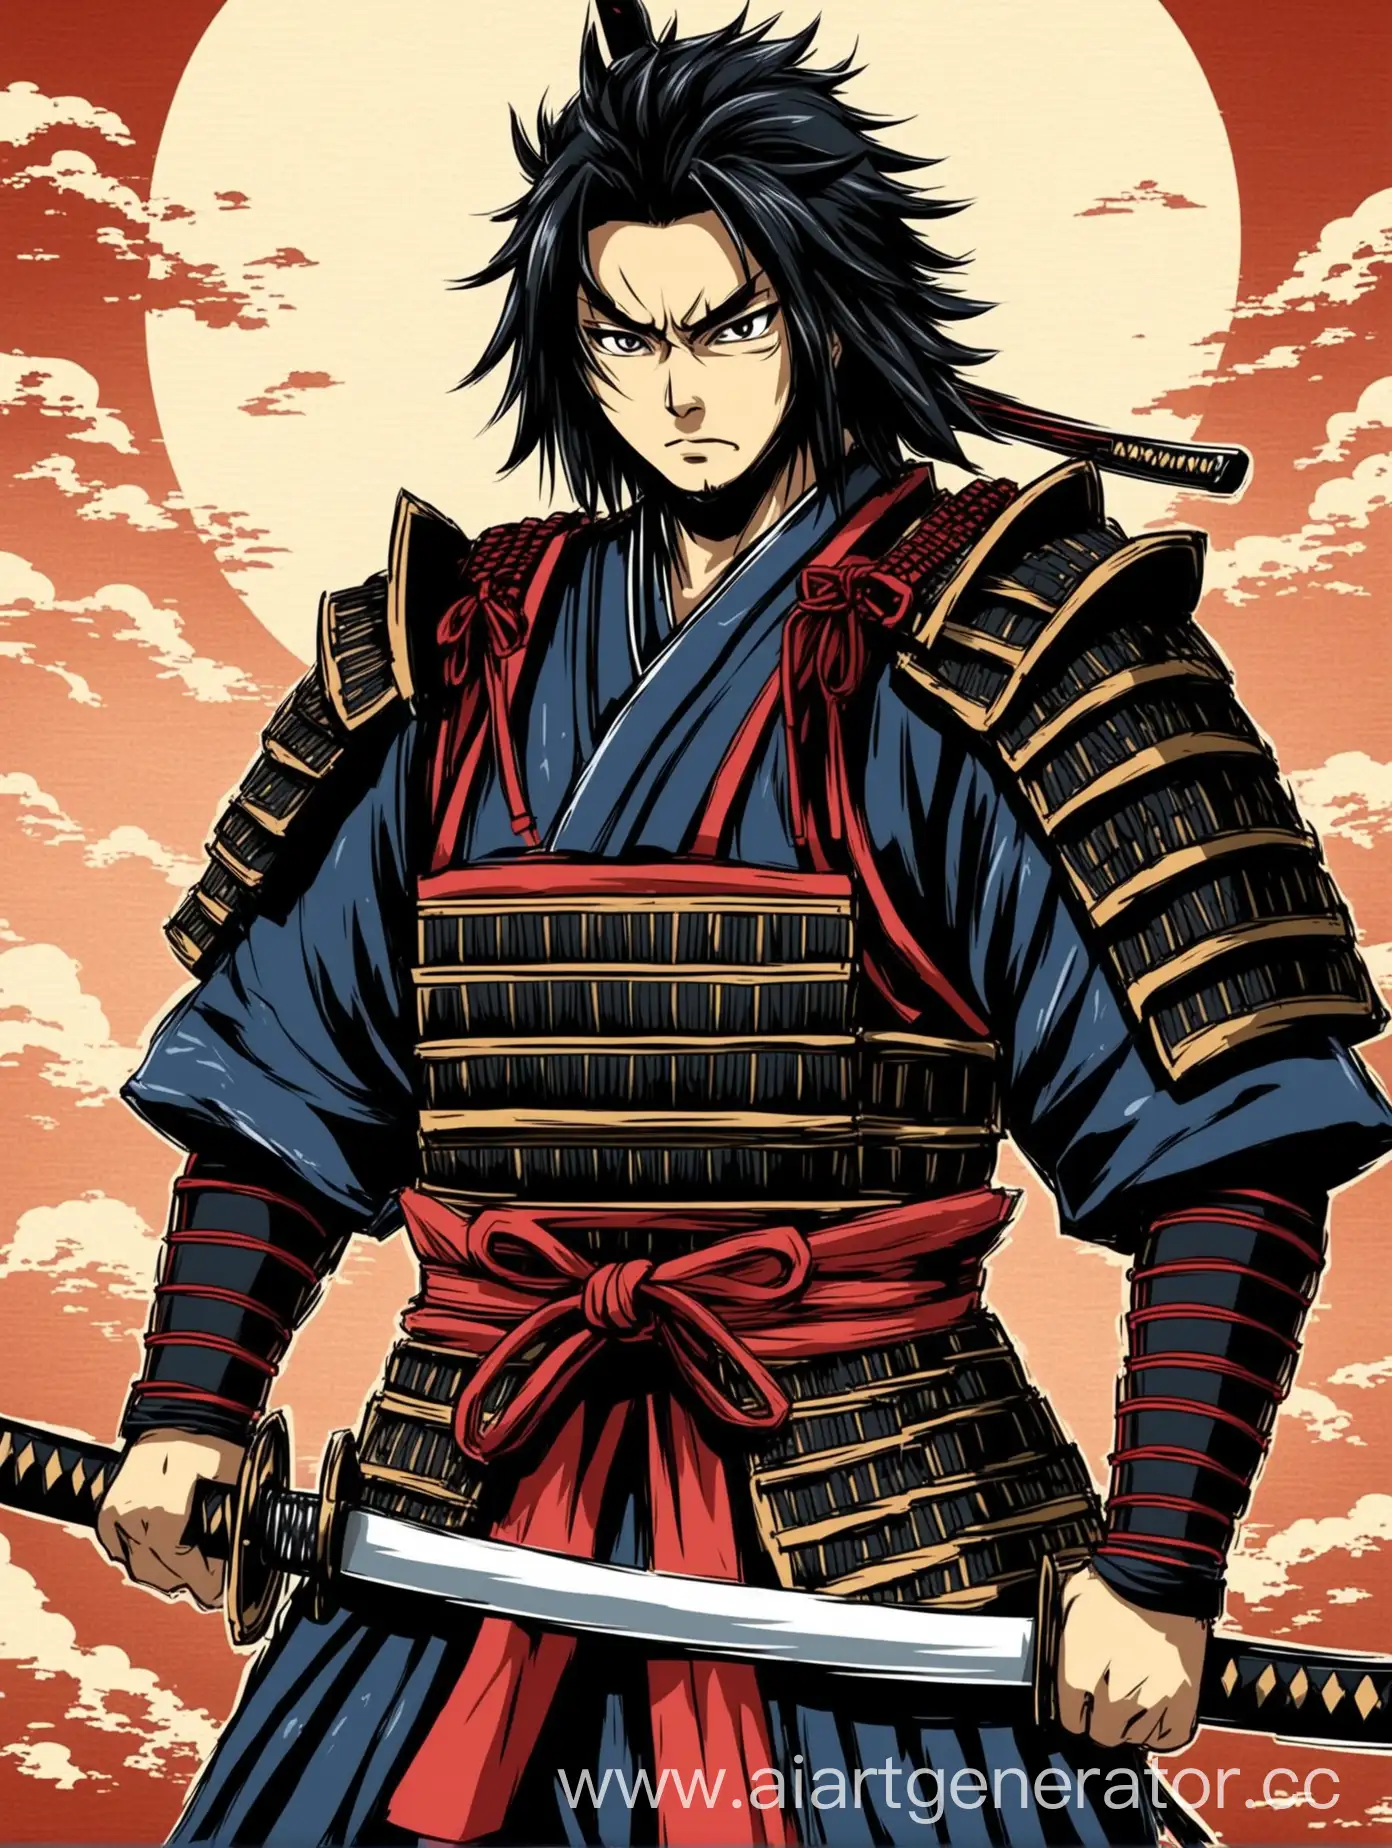 Samurai-Warrior-with-Katana-Sword-in-Anime-Style-Illustration